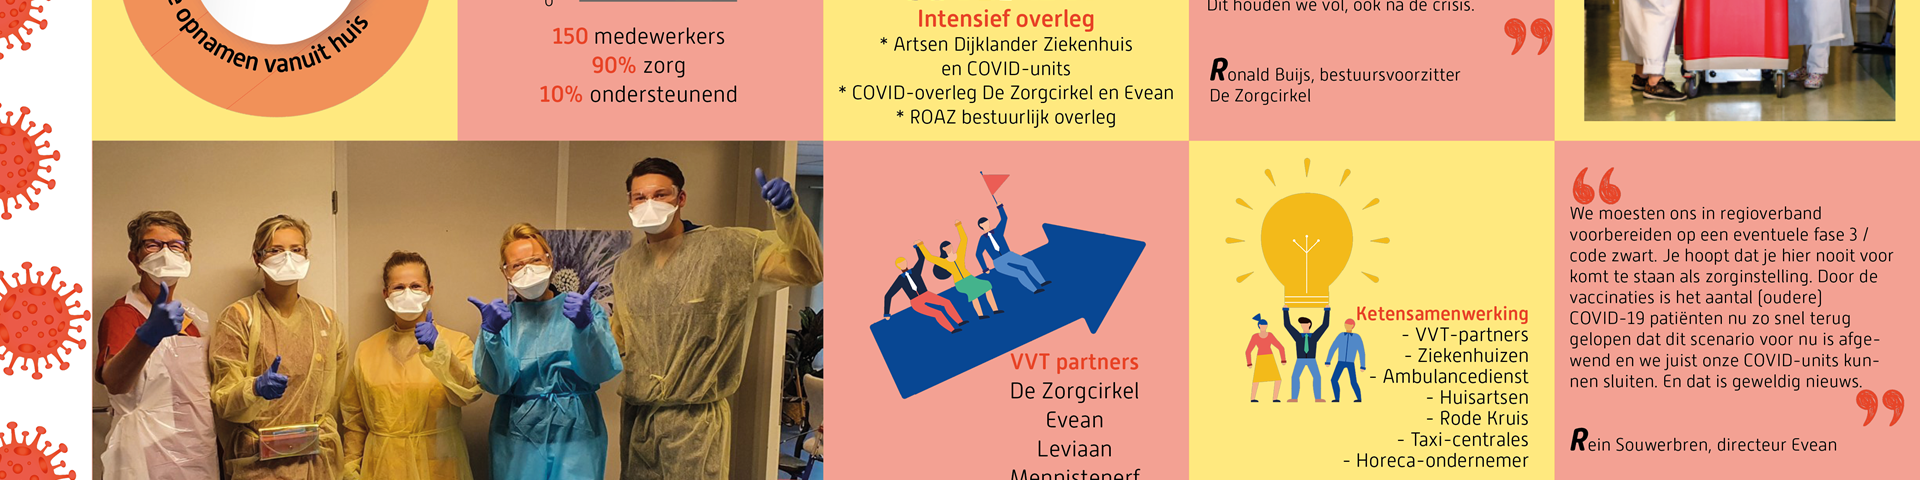 Infographic_COVID-units_De_Zorgcirkel_en_Evean_DEF.png